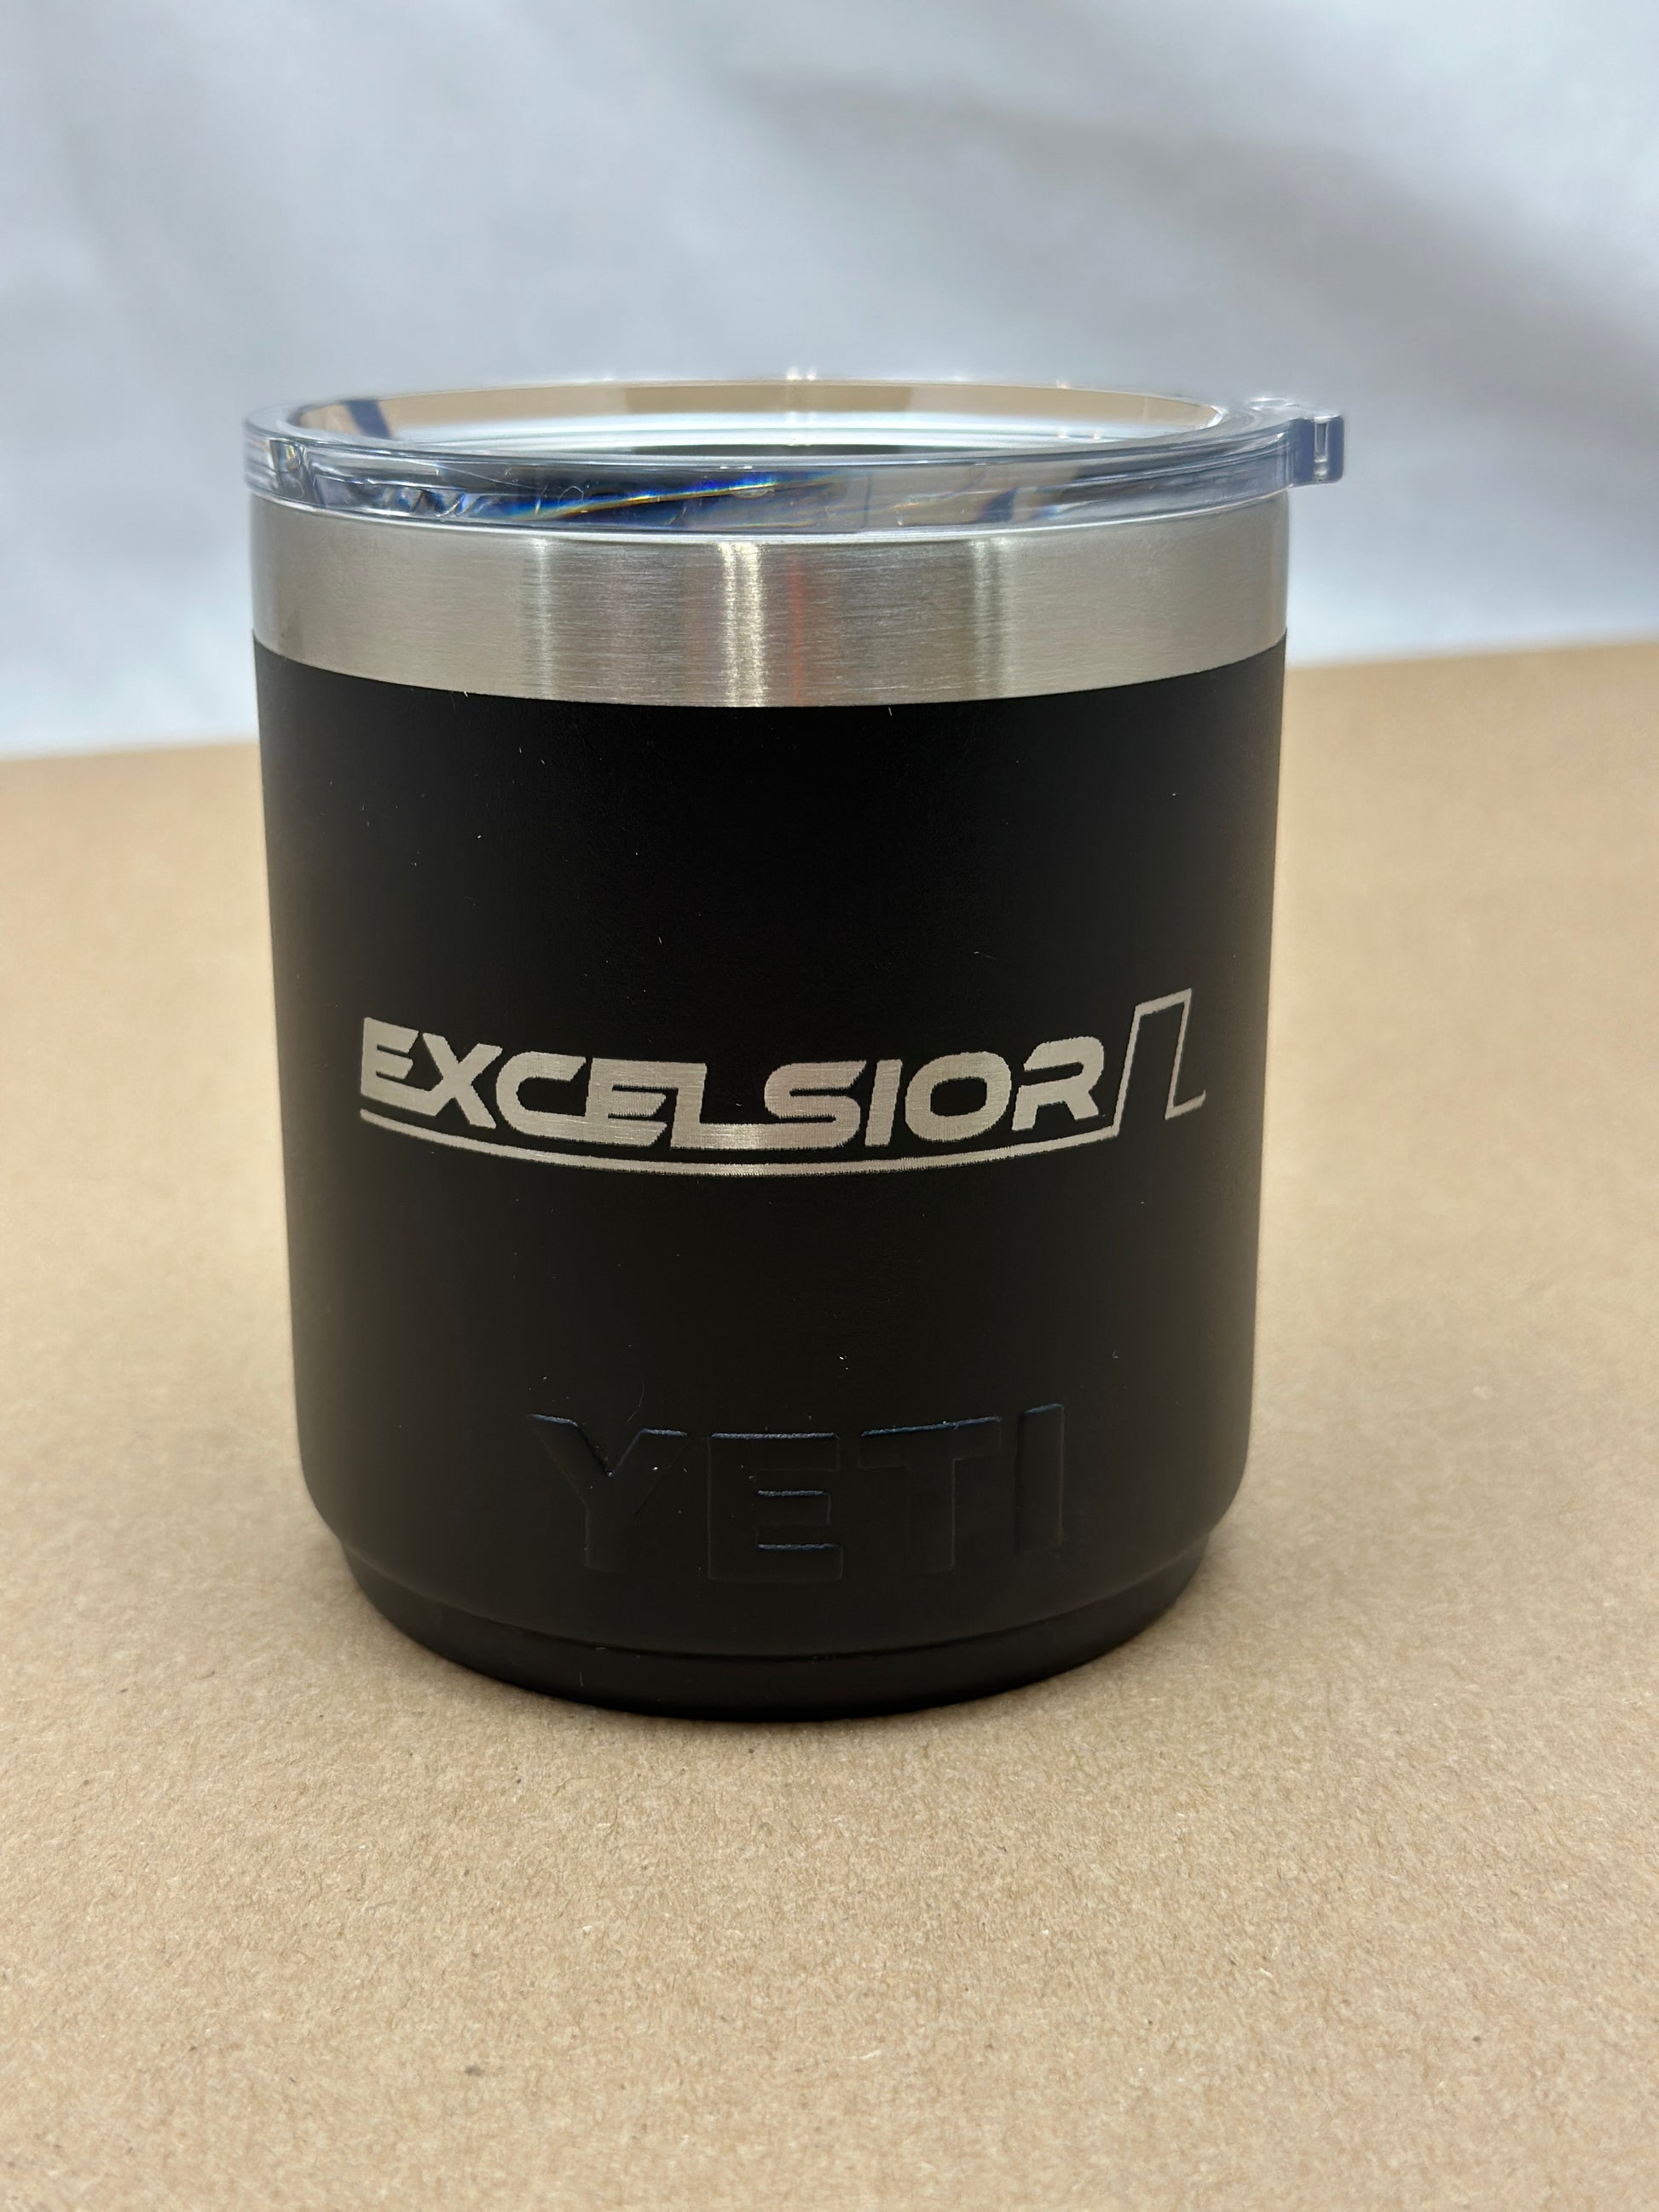 Custom Engraved YETI Rambler 14oz Stackable Mug with Magslider Lid